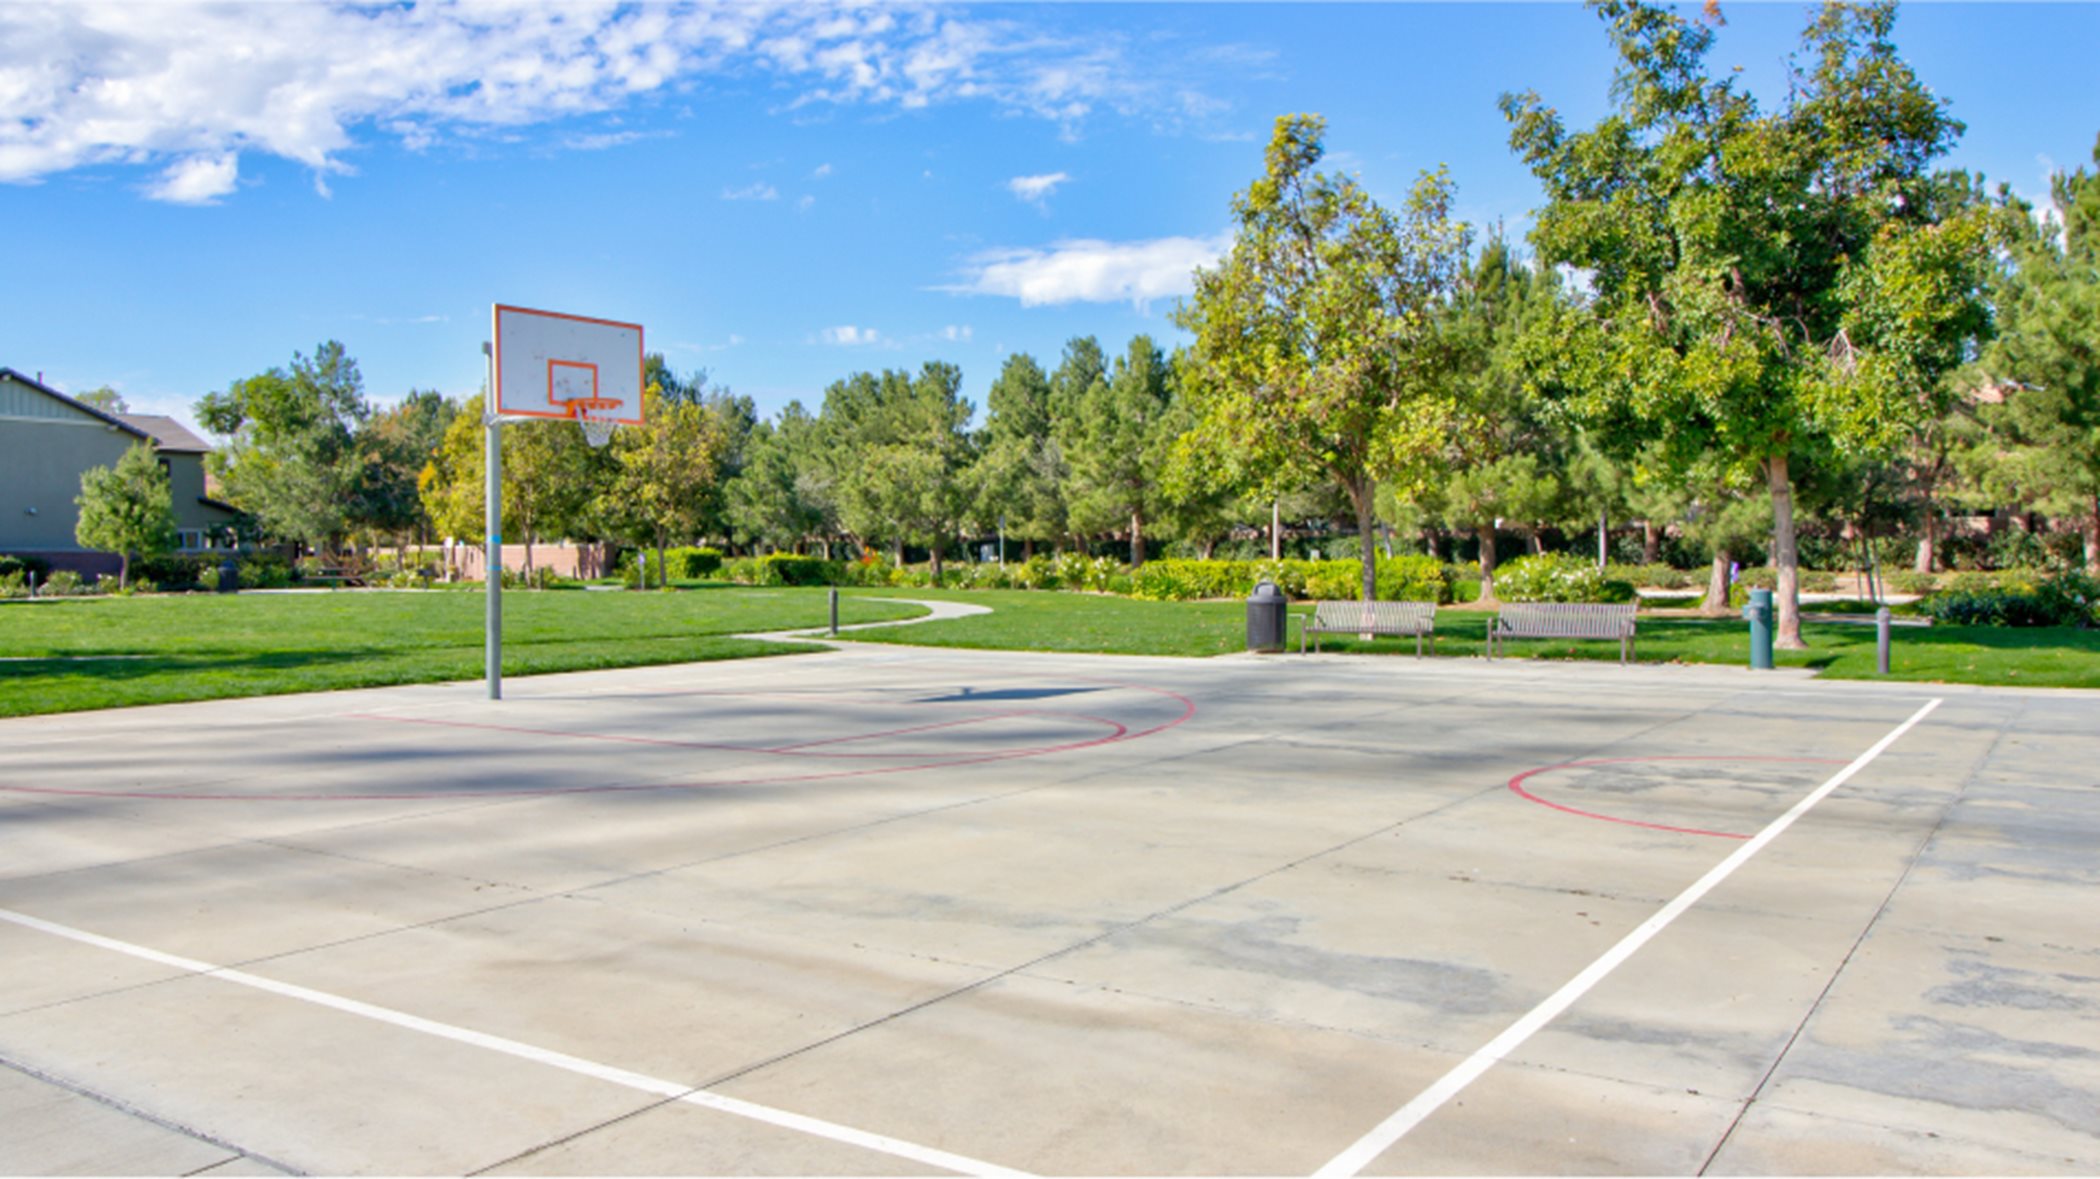 Gardenhouse basketball court